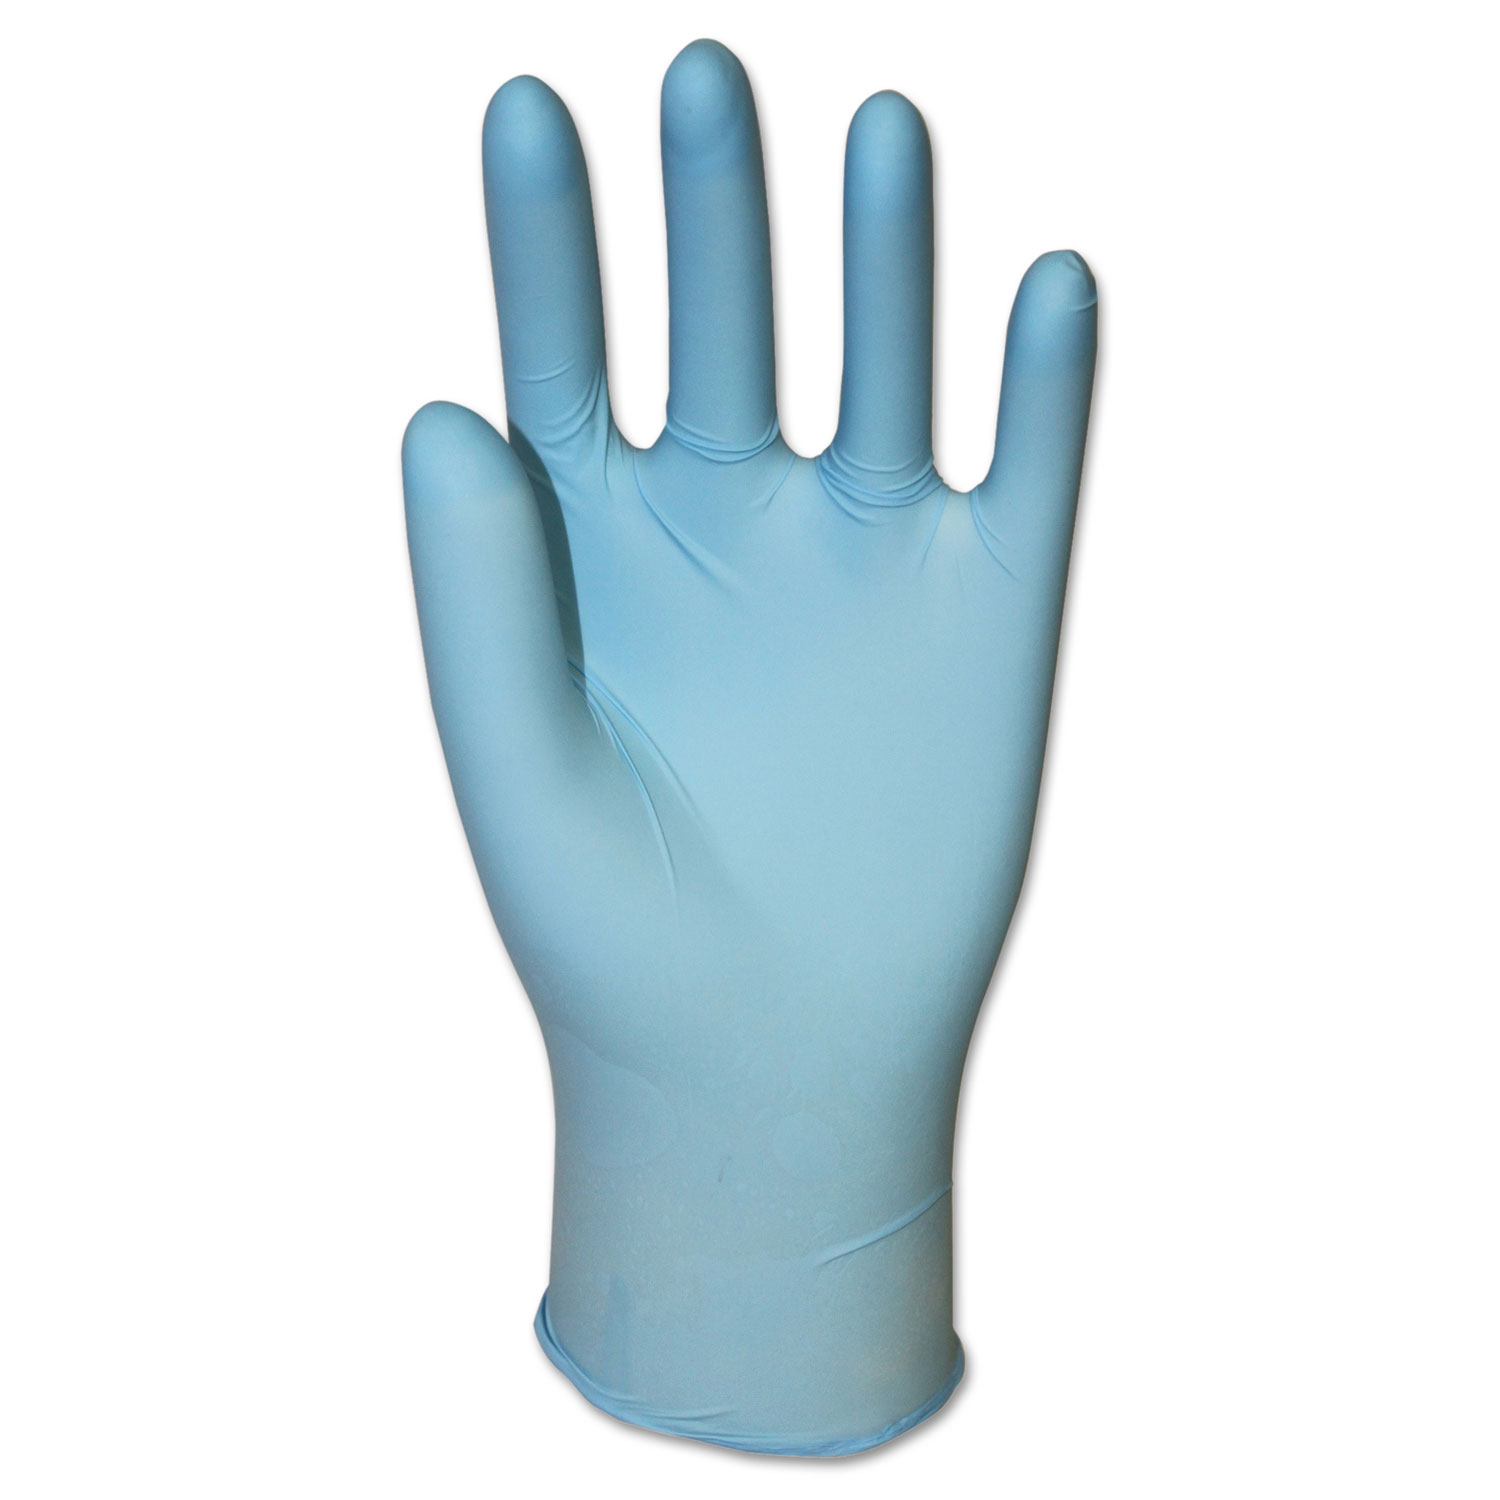  Impact IMP 8645M DiversaMed Disposable Powder-Free Exam Nitrile Gloves, Blue, Medium, 100/Box, 10 Boxes/Carton (IMP8645M) 